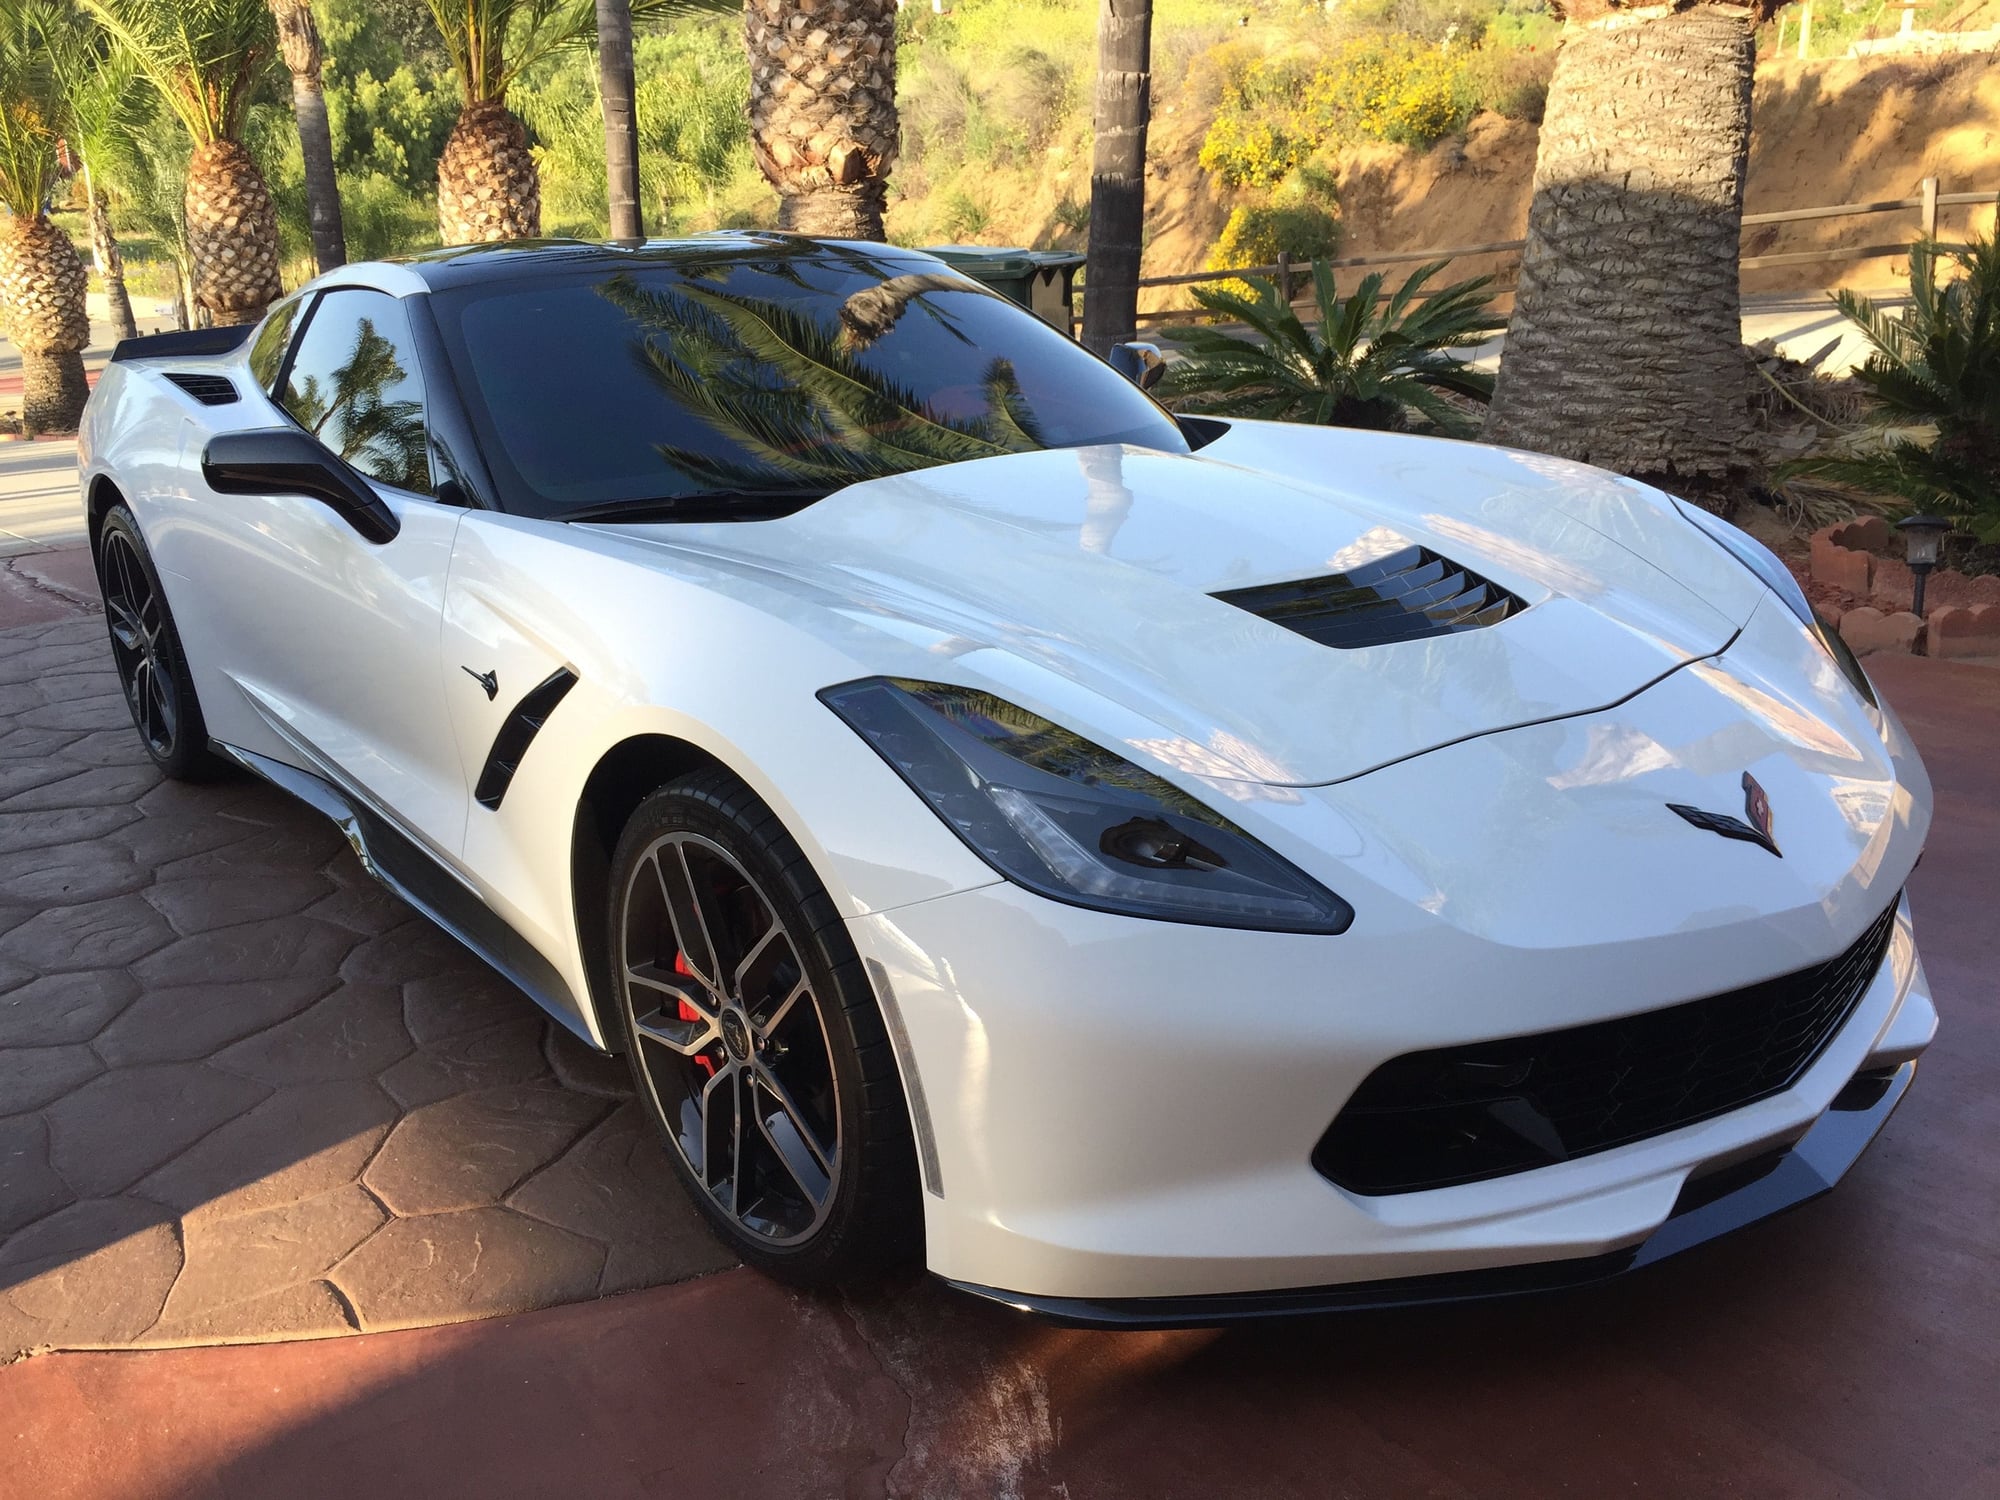 FS (For Sale) 7-Speed, Z51, Arctic White w/Red - CorvetteForum - Chevrolet  Corvette Forum Discussion